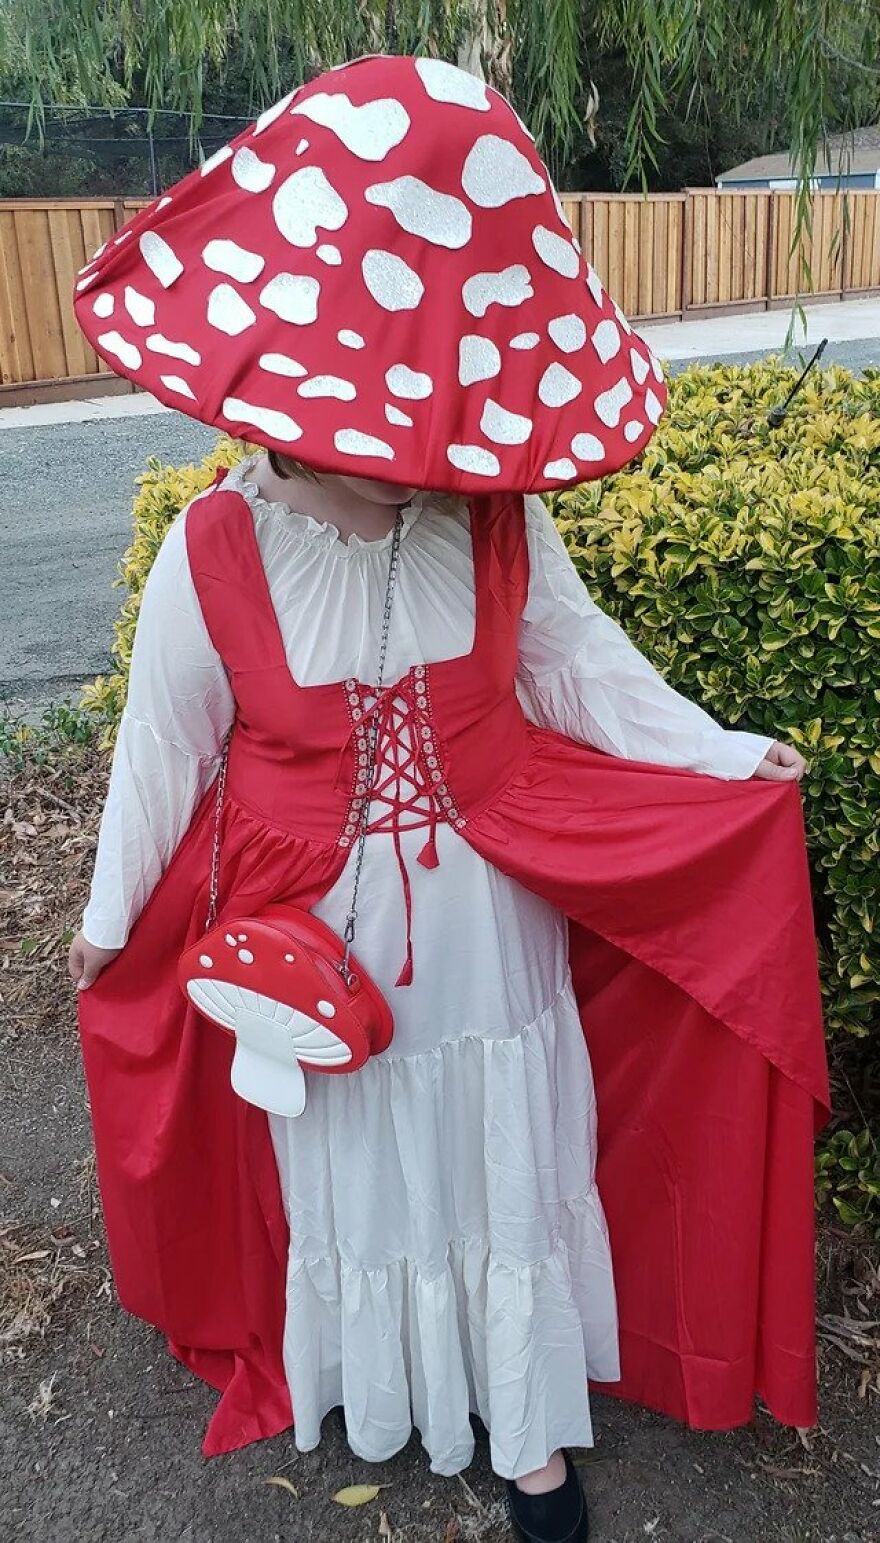 My Daughter's Mushroom Costume!